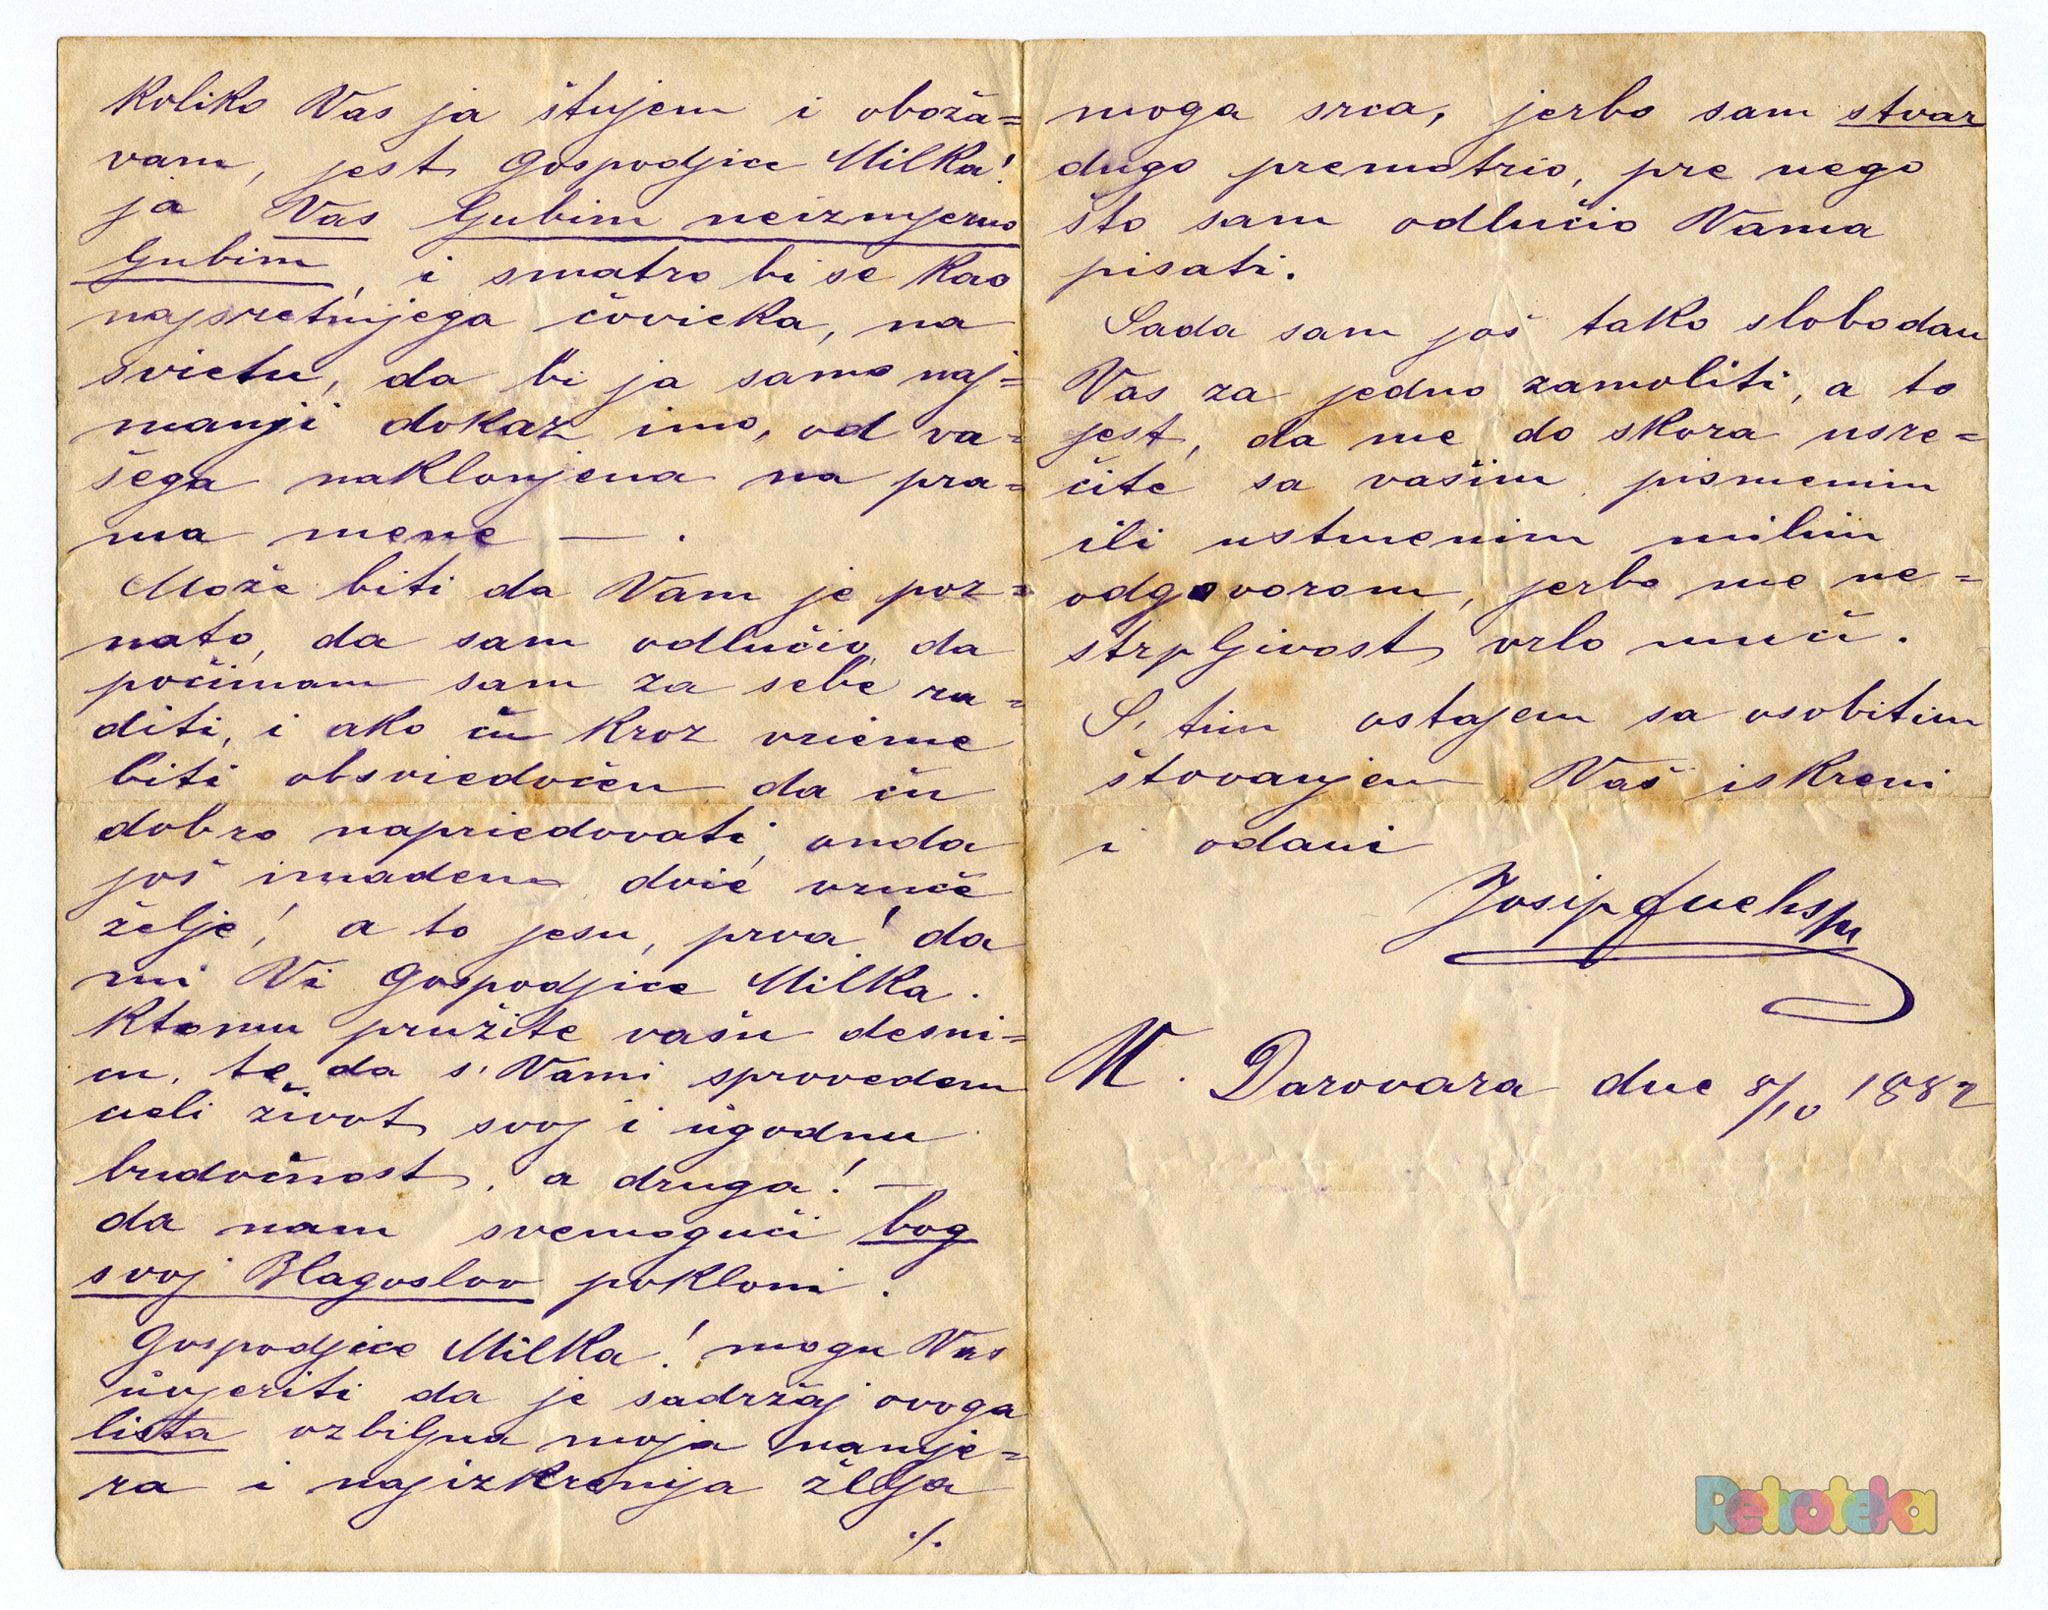 Pogledajte ljubavno pismo iz 1882: 'Već ste morali opaziti po mojem ponašanju koliko vas obožavam'